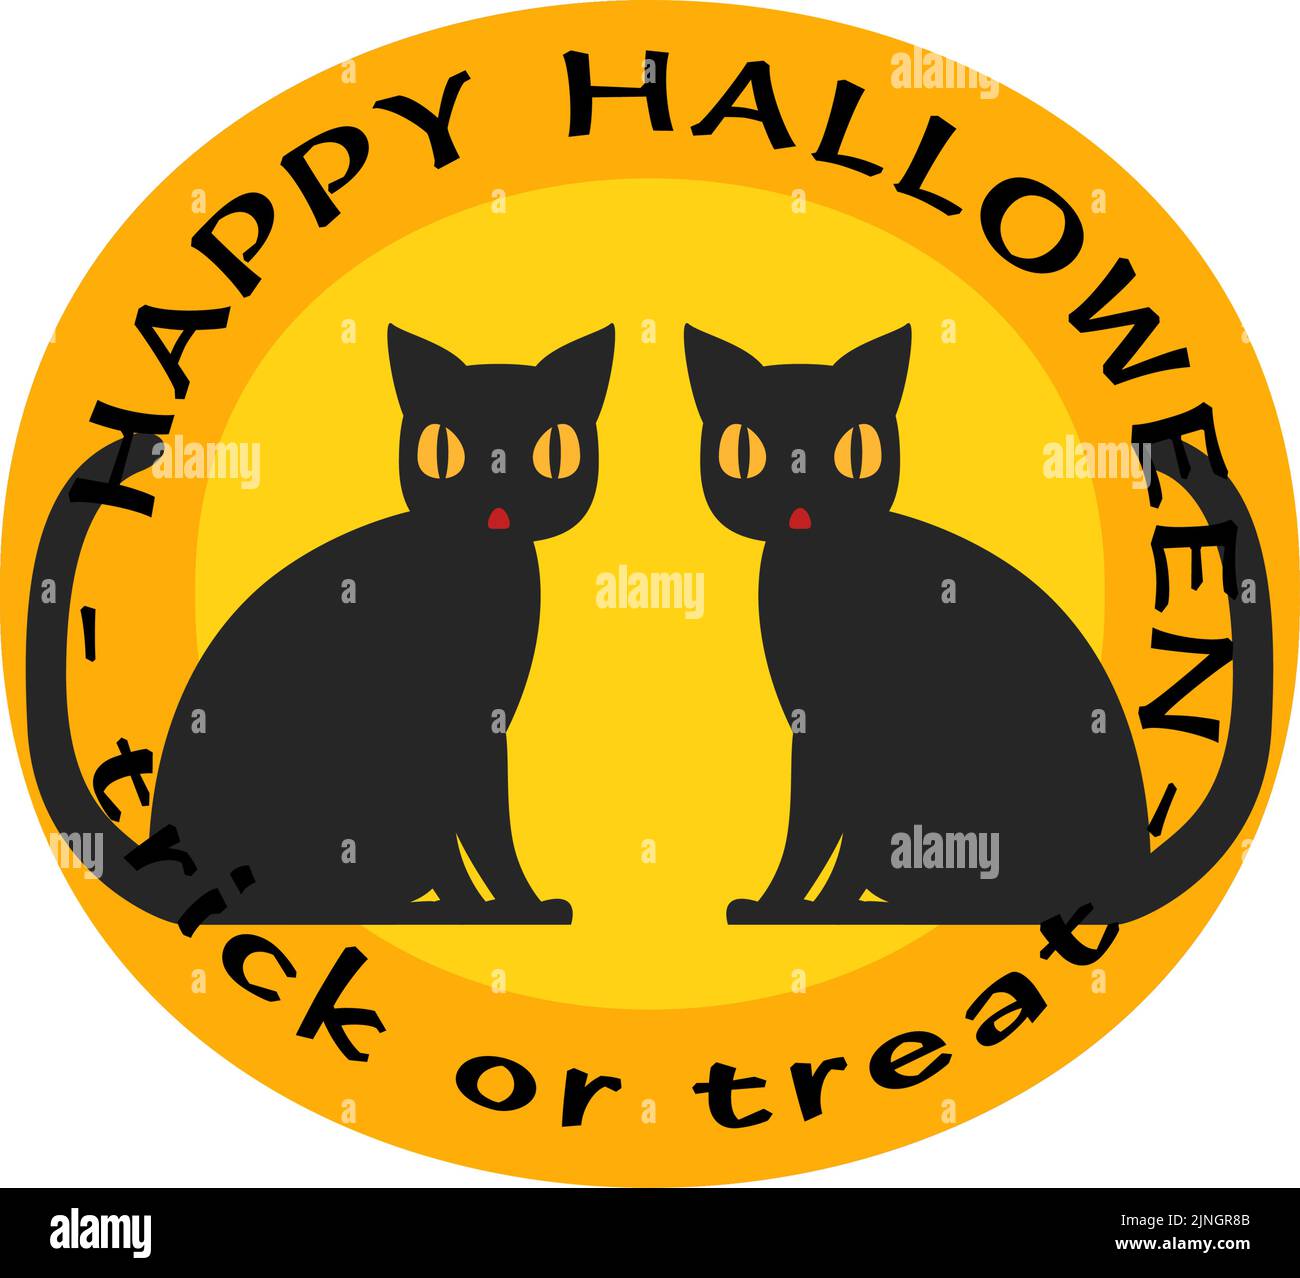 Halloween orange icon, illustration of two black cats in mirror  Vector illustration Stock Vector